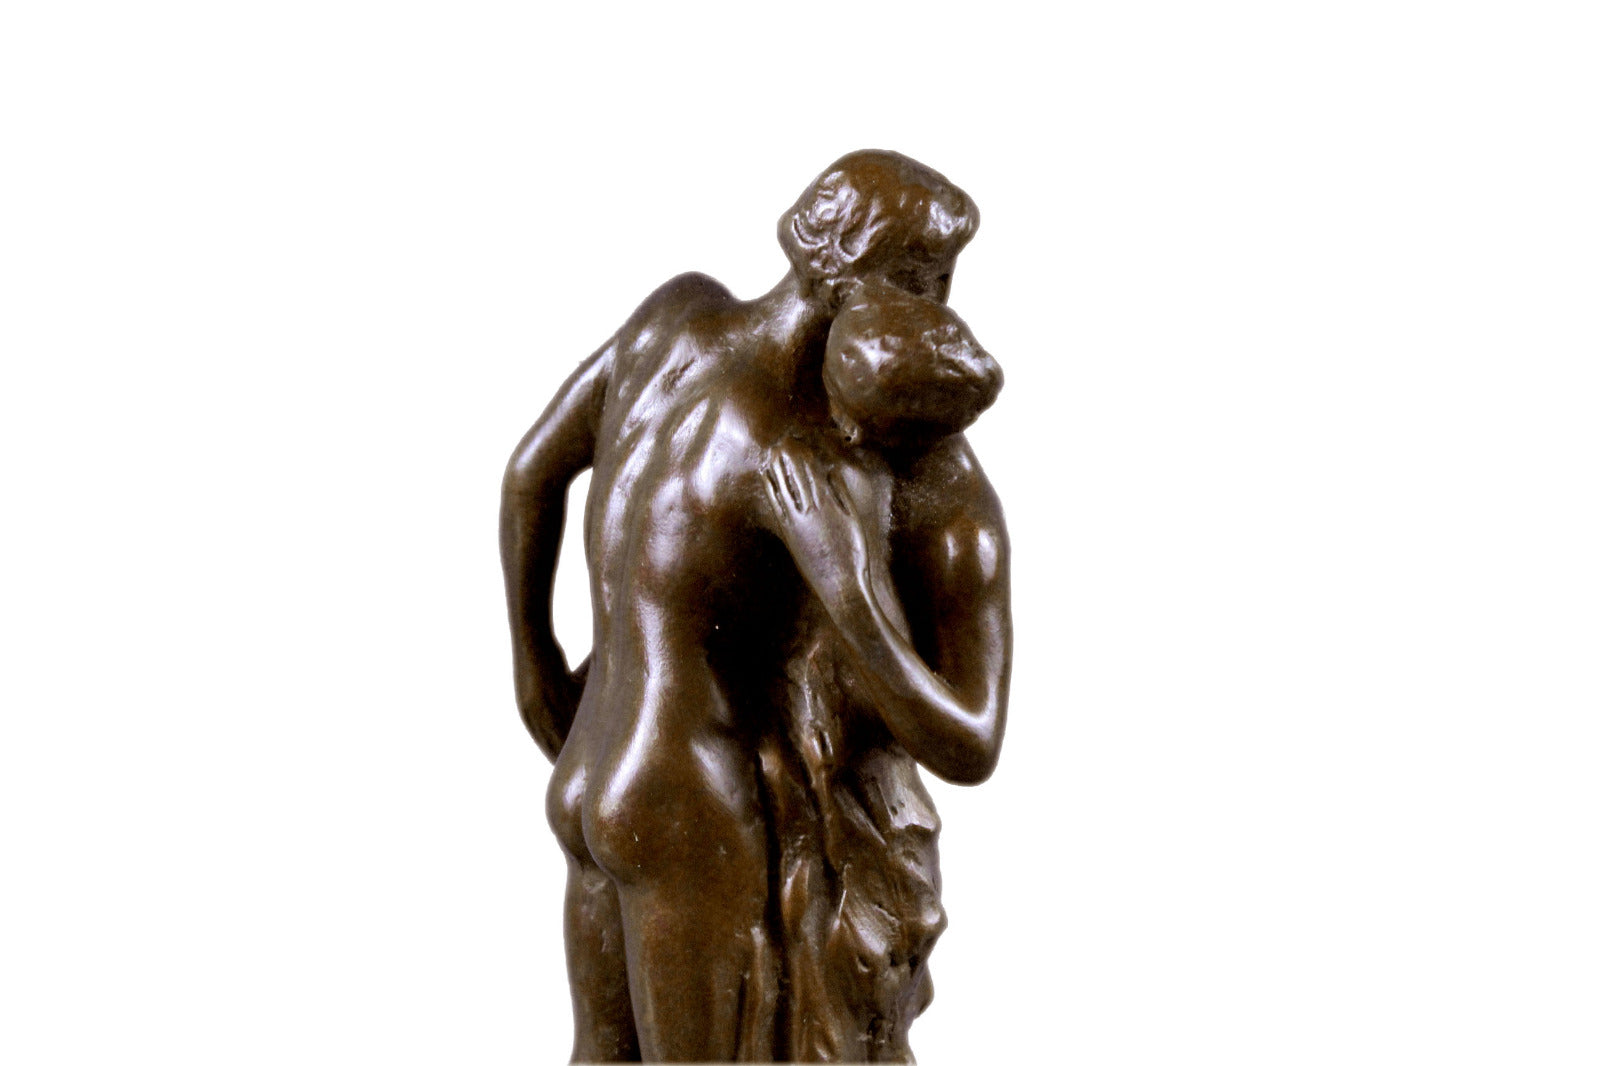 Hand Made Statue Eternal Idol By Rodin Nude Couple Bronze Sculpture Figurine Art